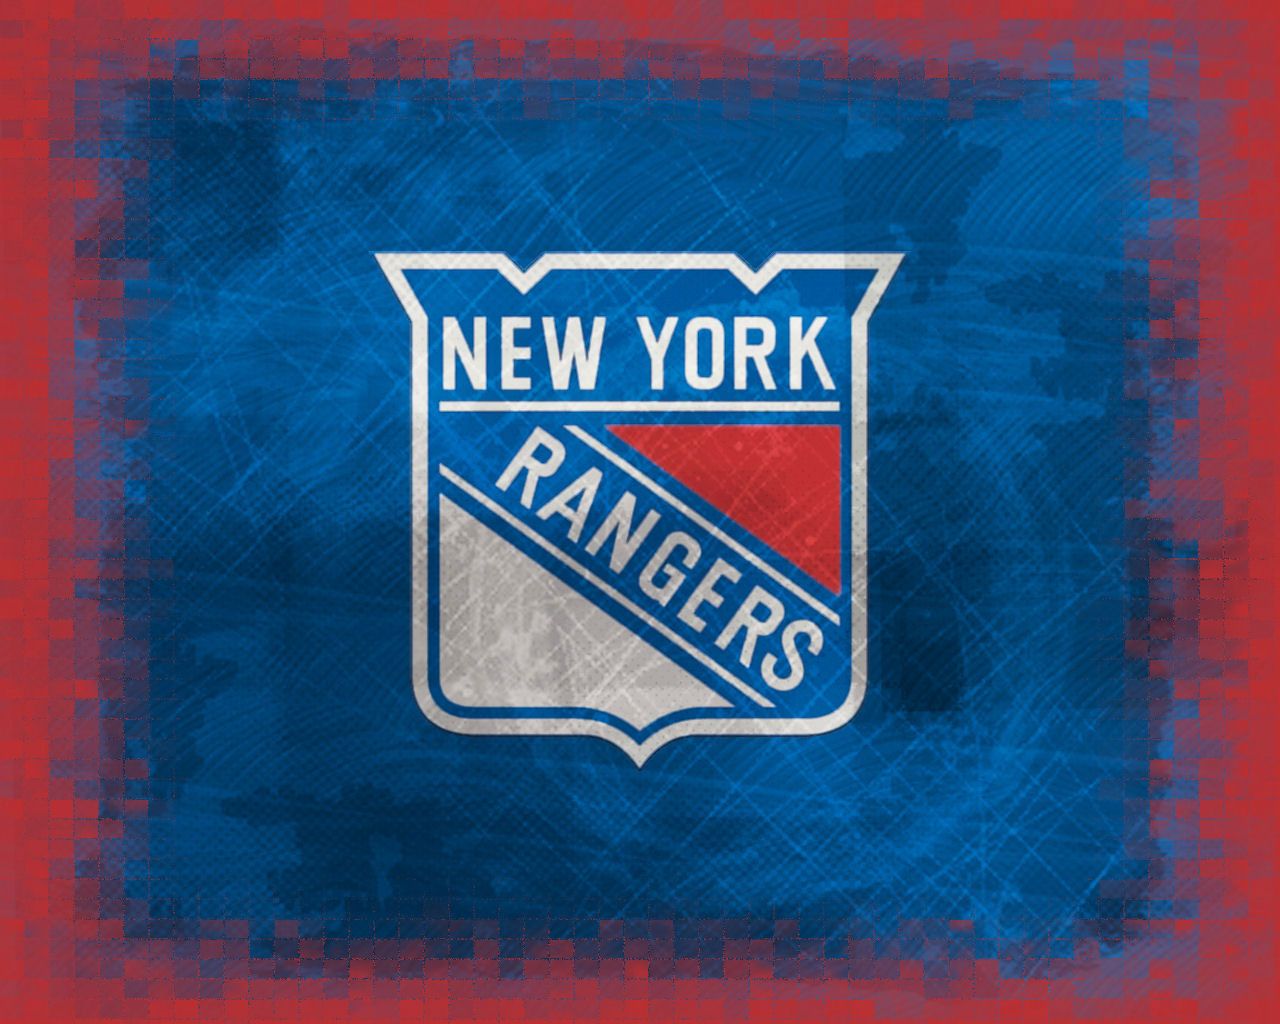 New York Rangers wallpapers New York Rangers background